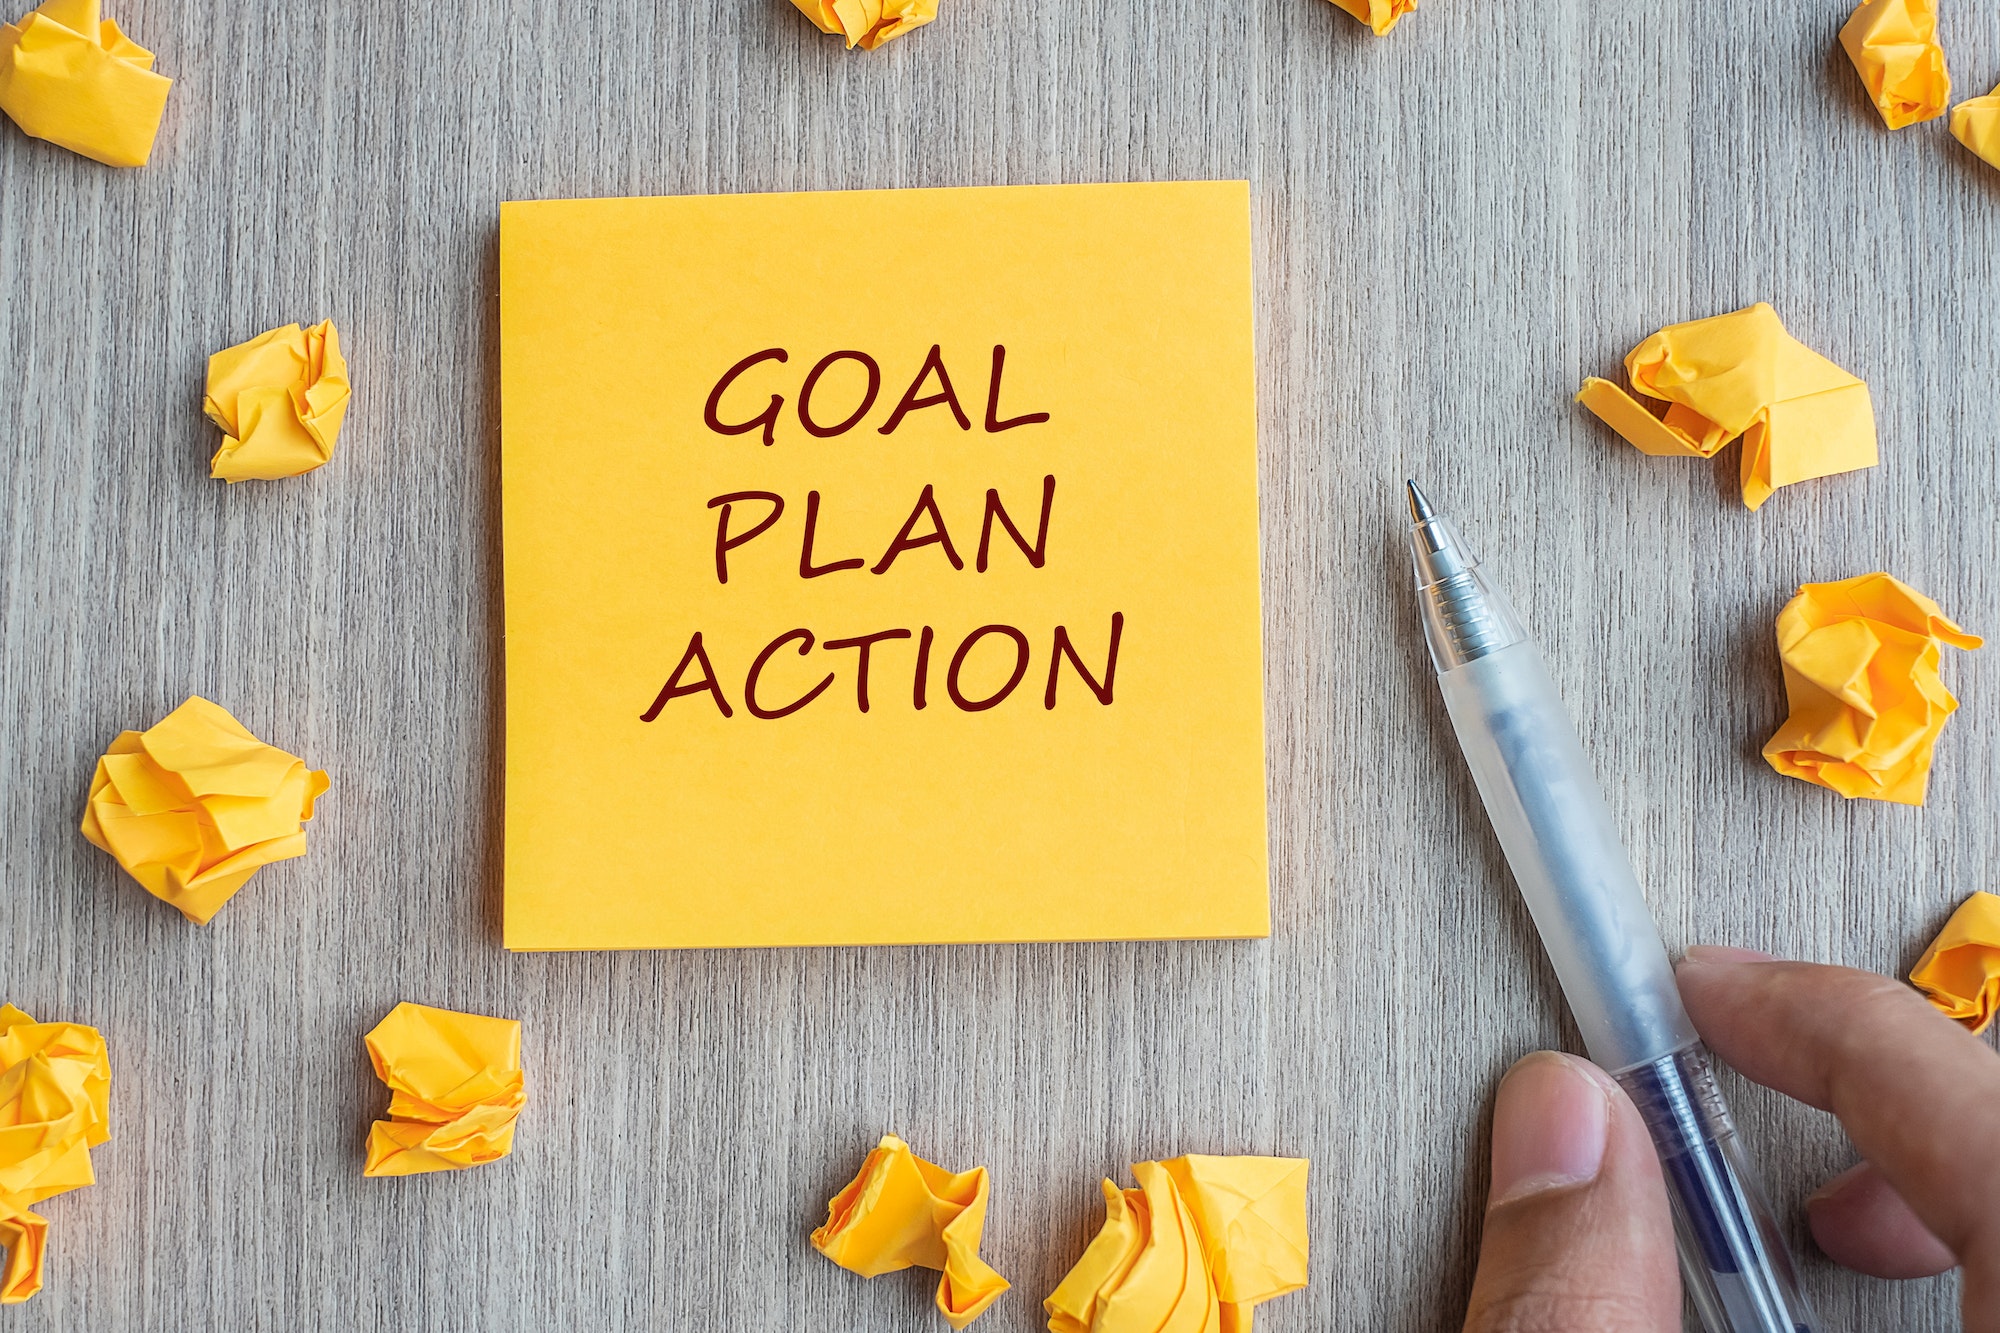 Goal plan action